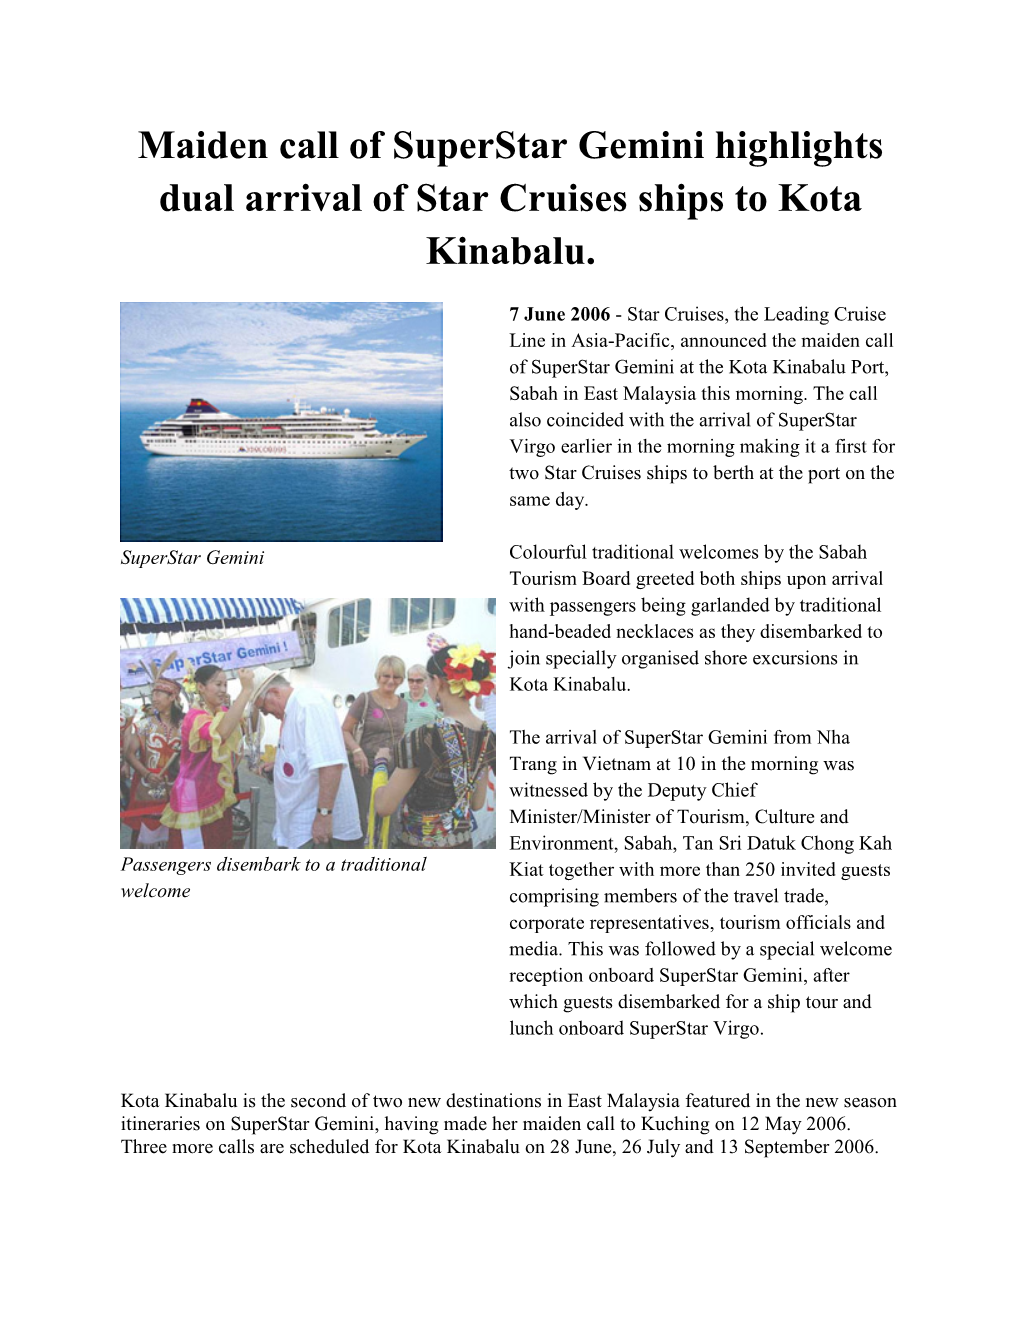 Maiden Call of Superstar Gemini Highlights Dual Arrival of Star Cruises Ships to Kota Kinabalu